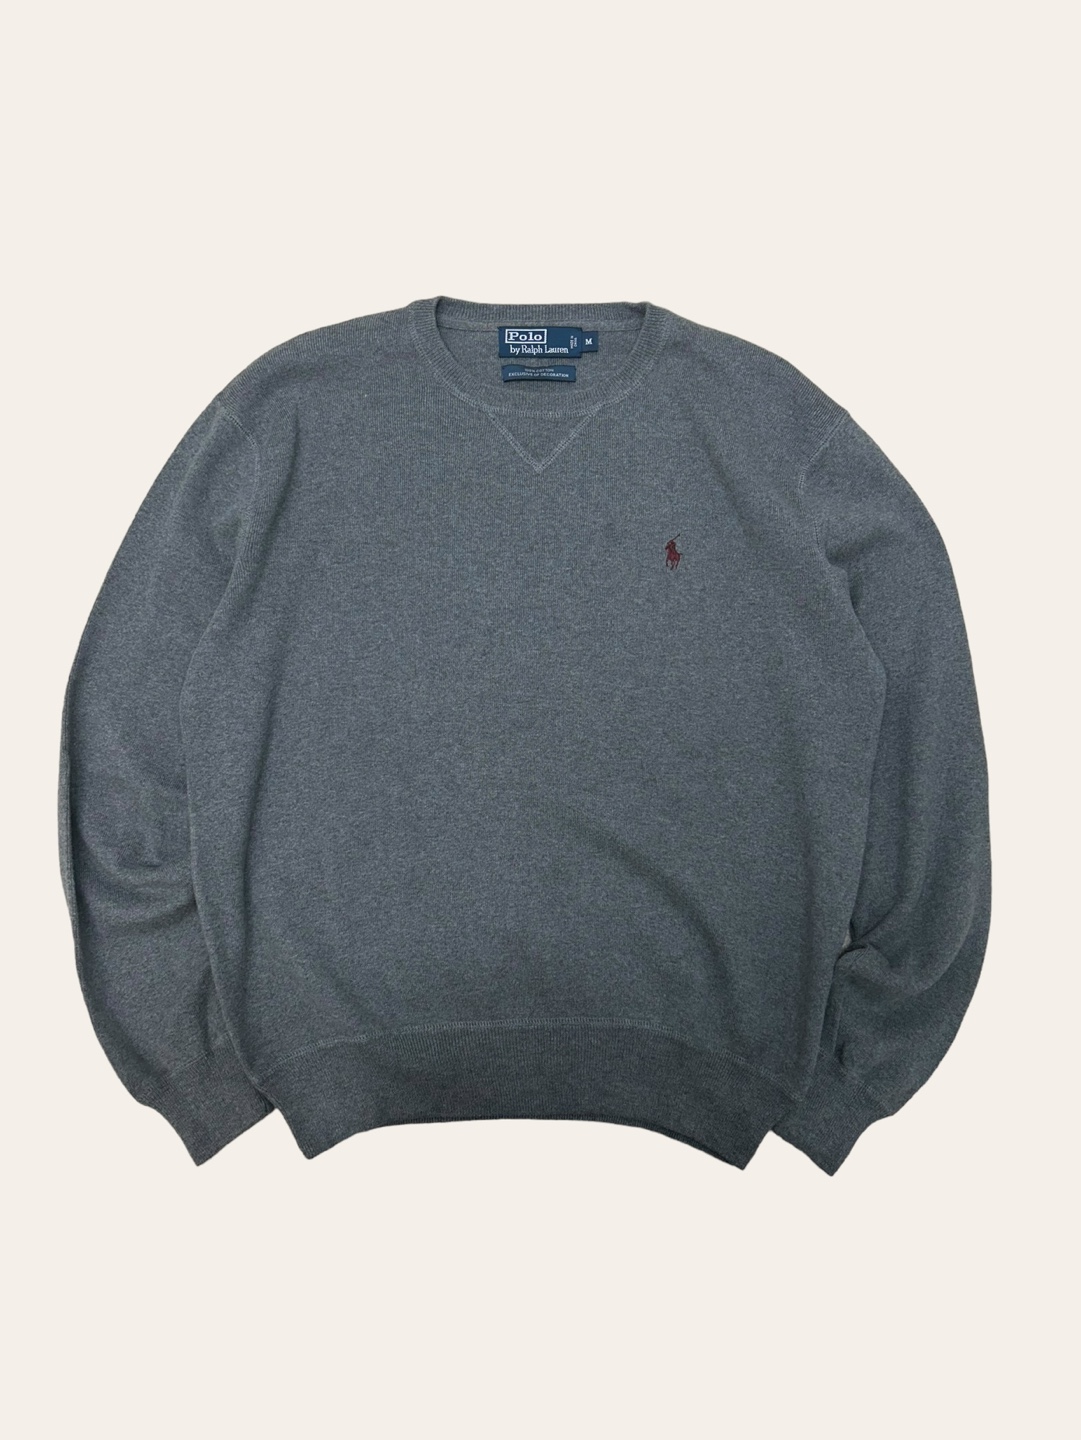 Polo ralph lauren gray cotton sweatshirt M